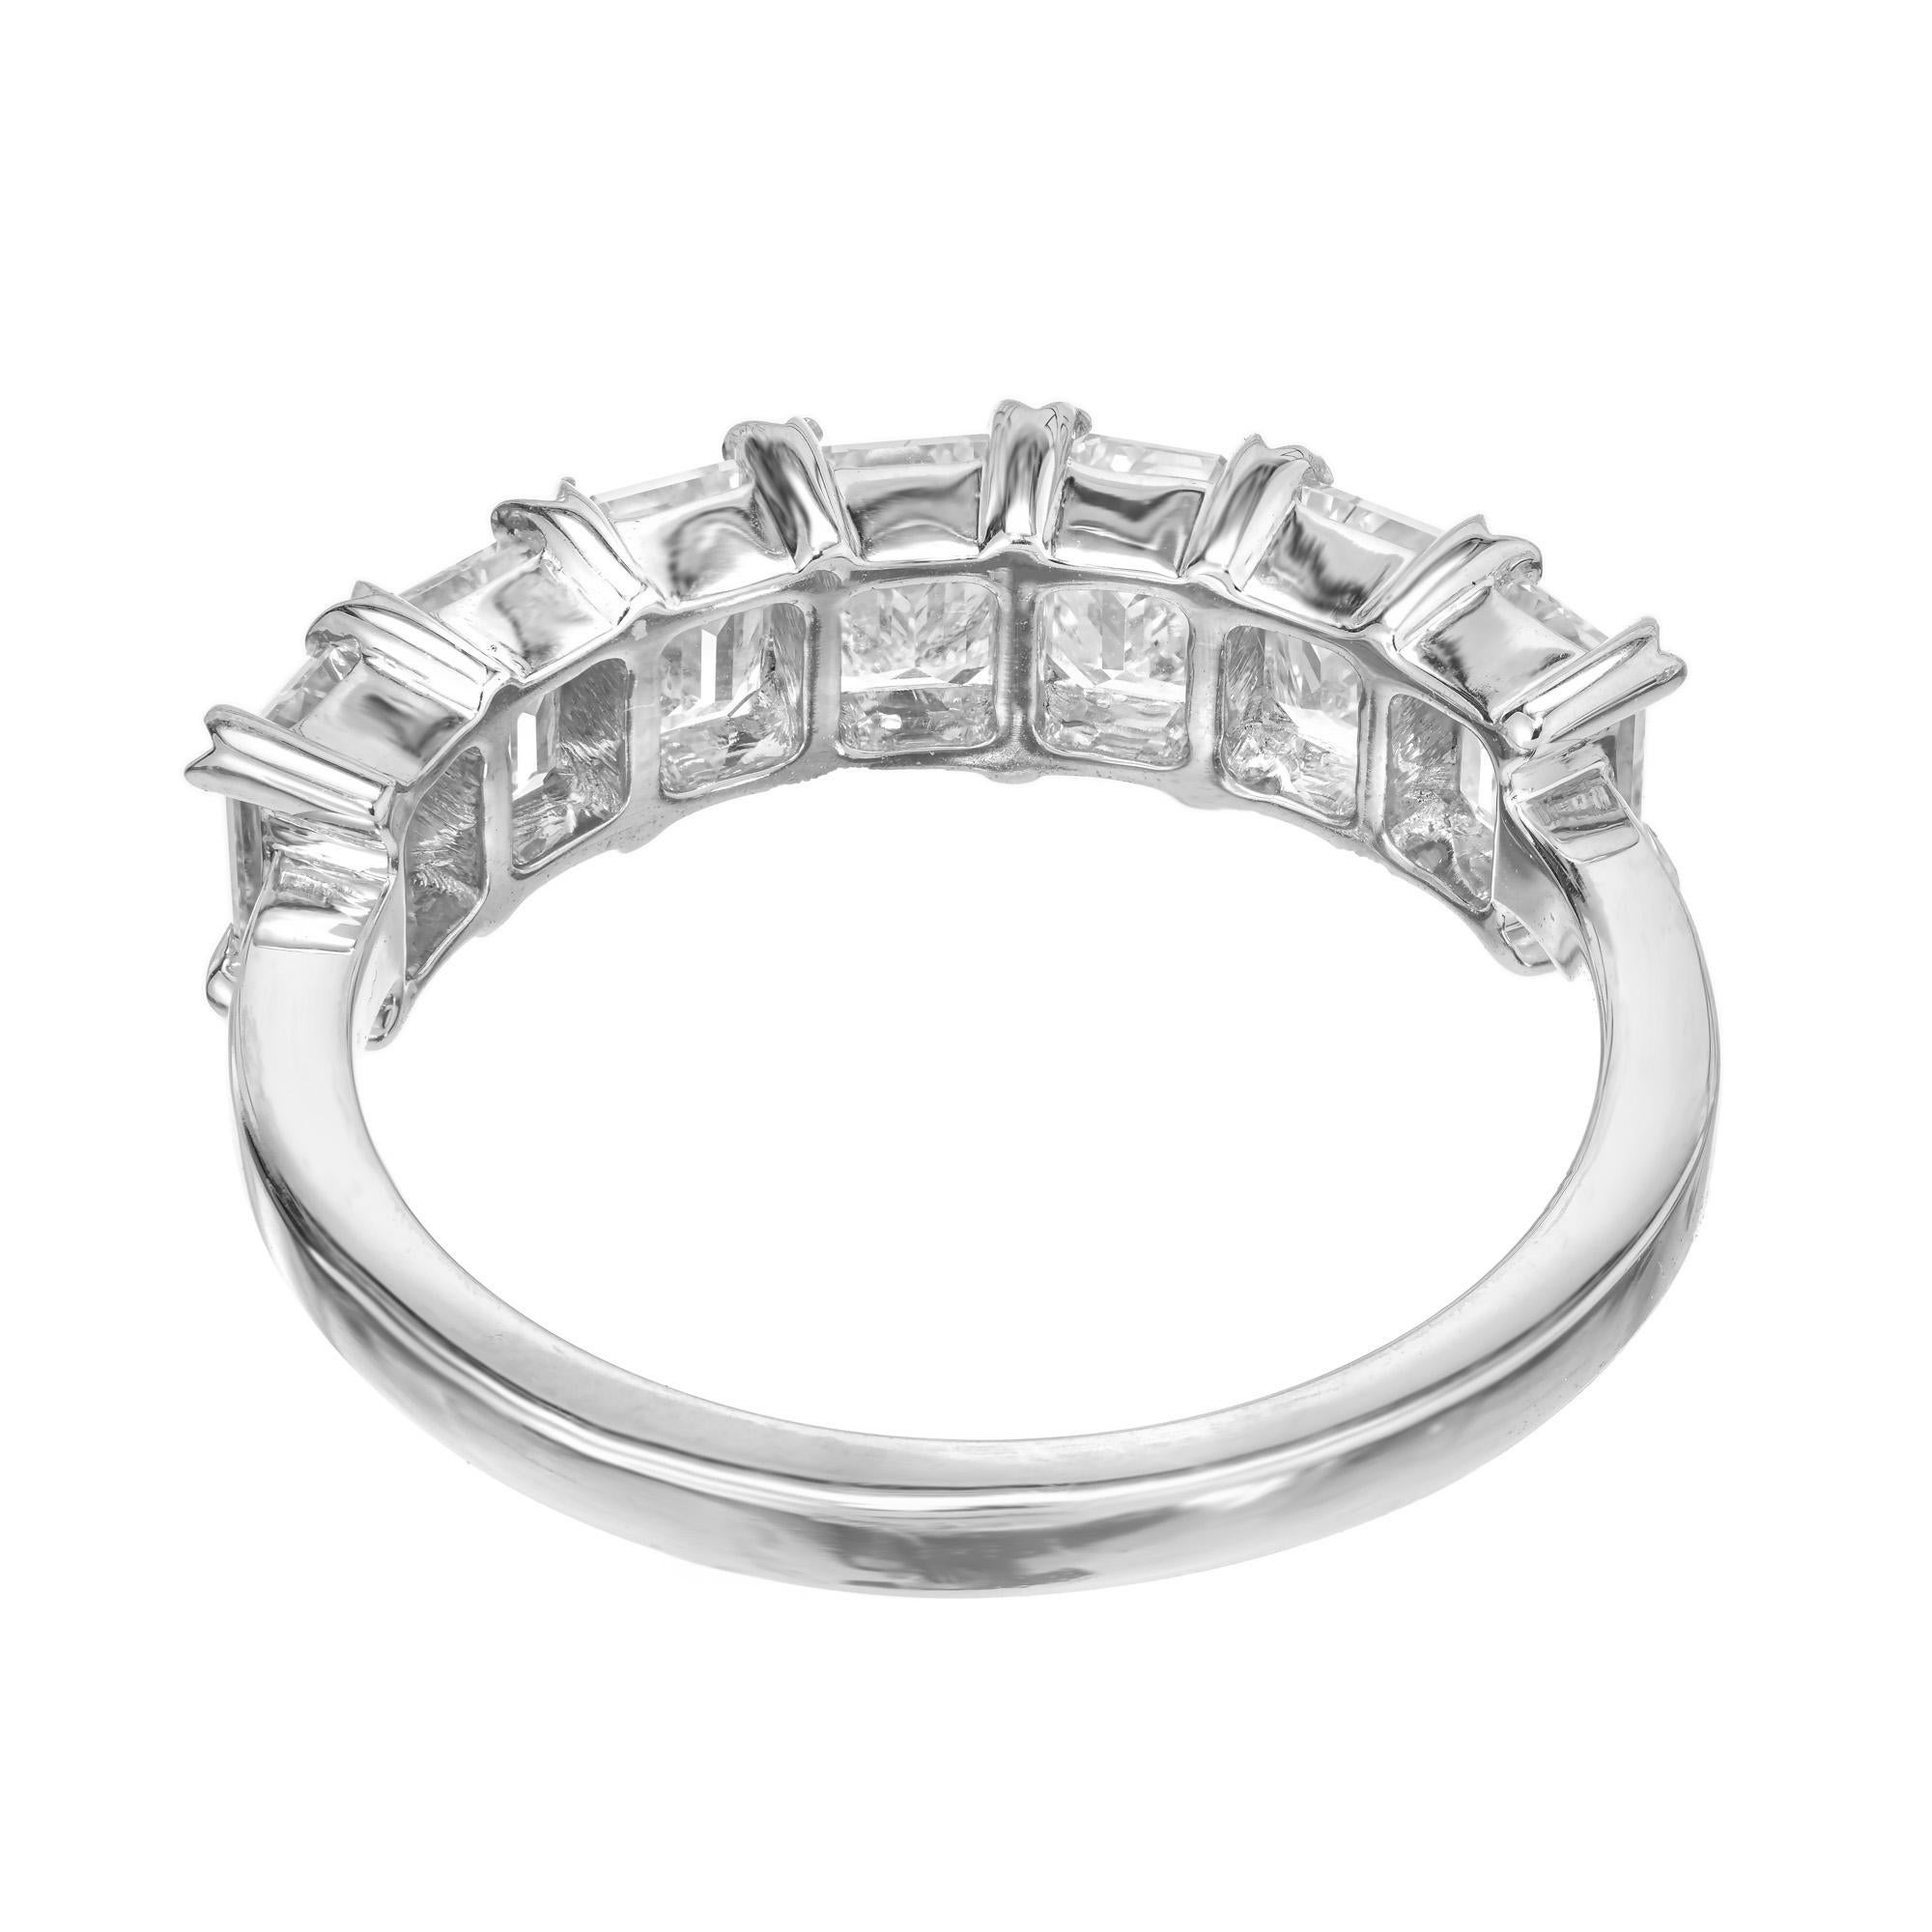 Peter Suchy 2.16 Carat Emerald Cut Diamond Platinum Wedding Band Ring For Sale 1